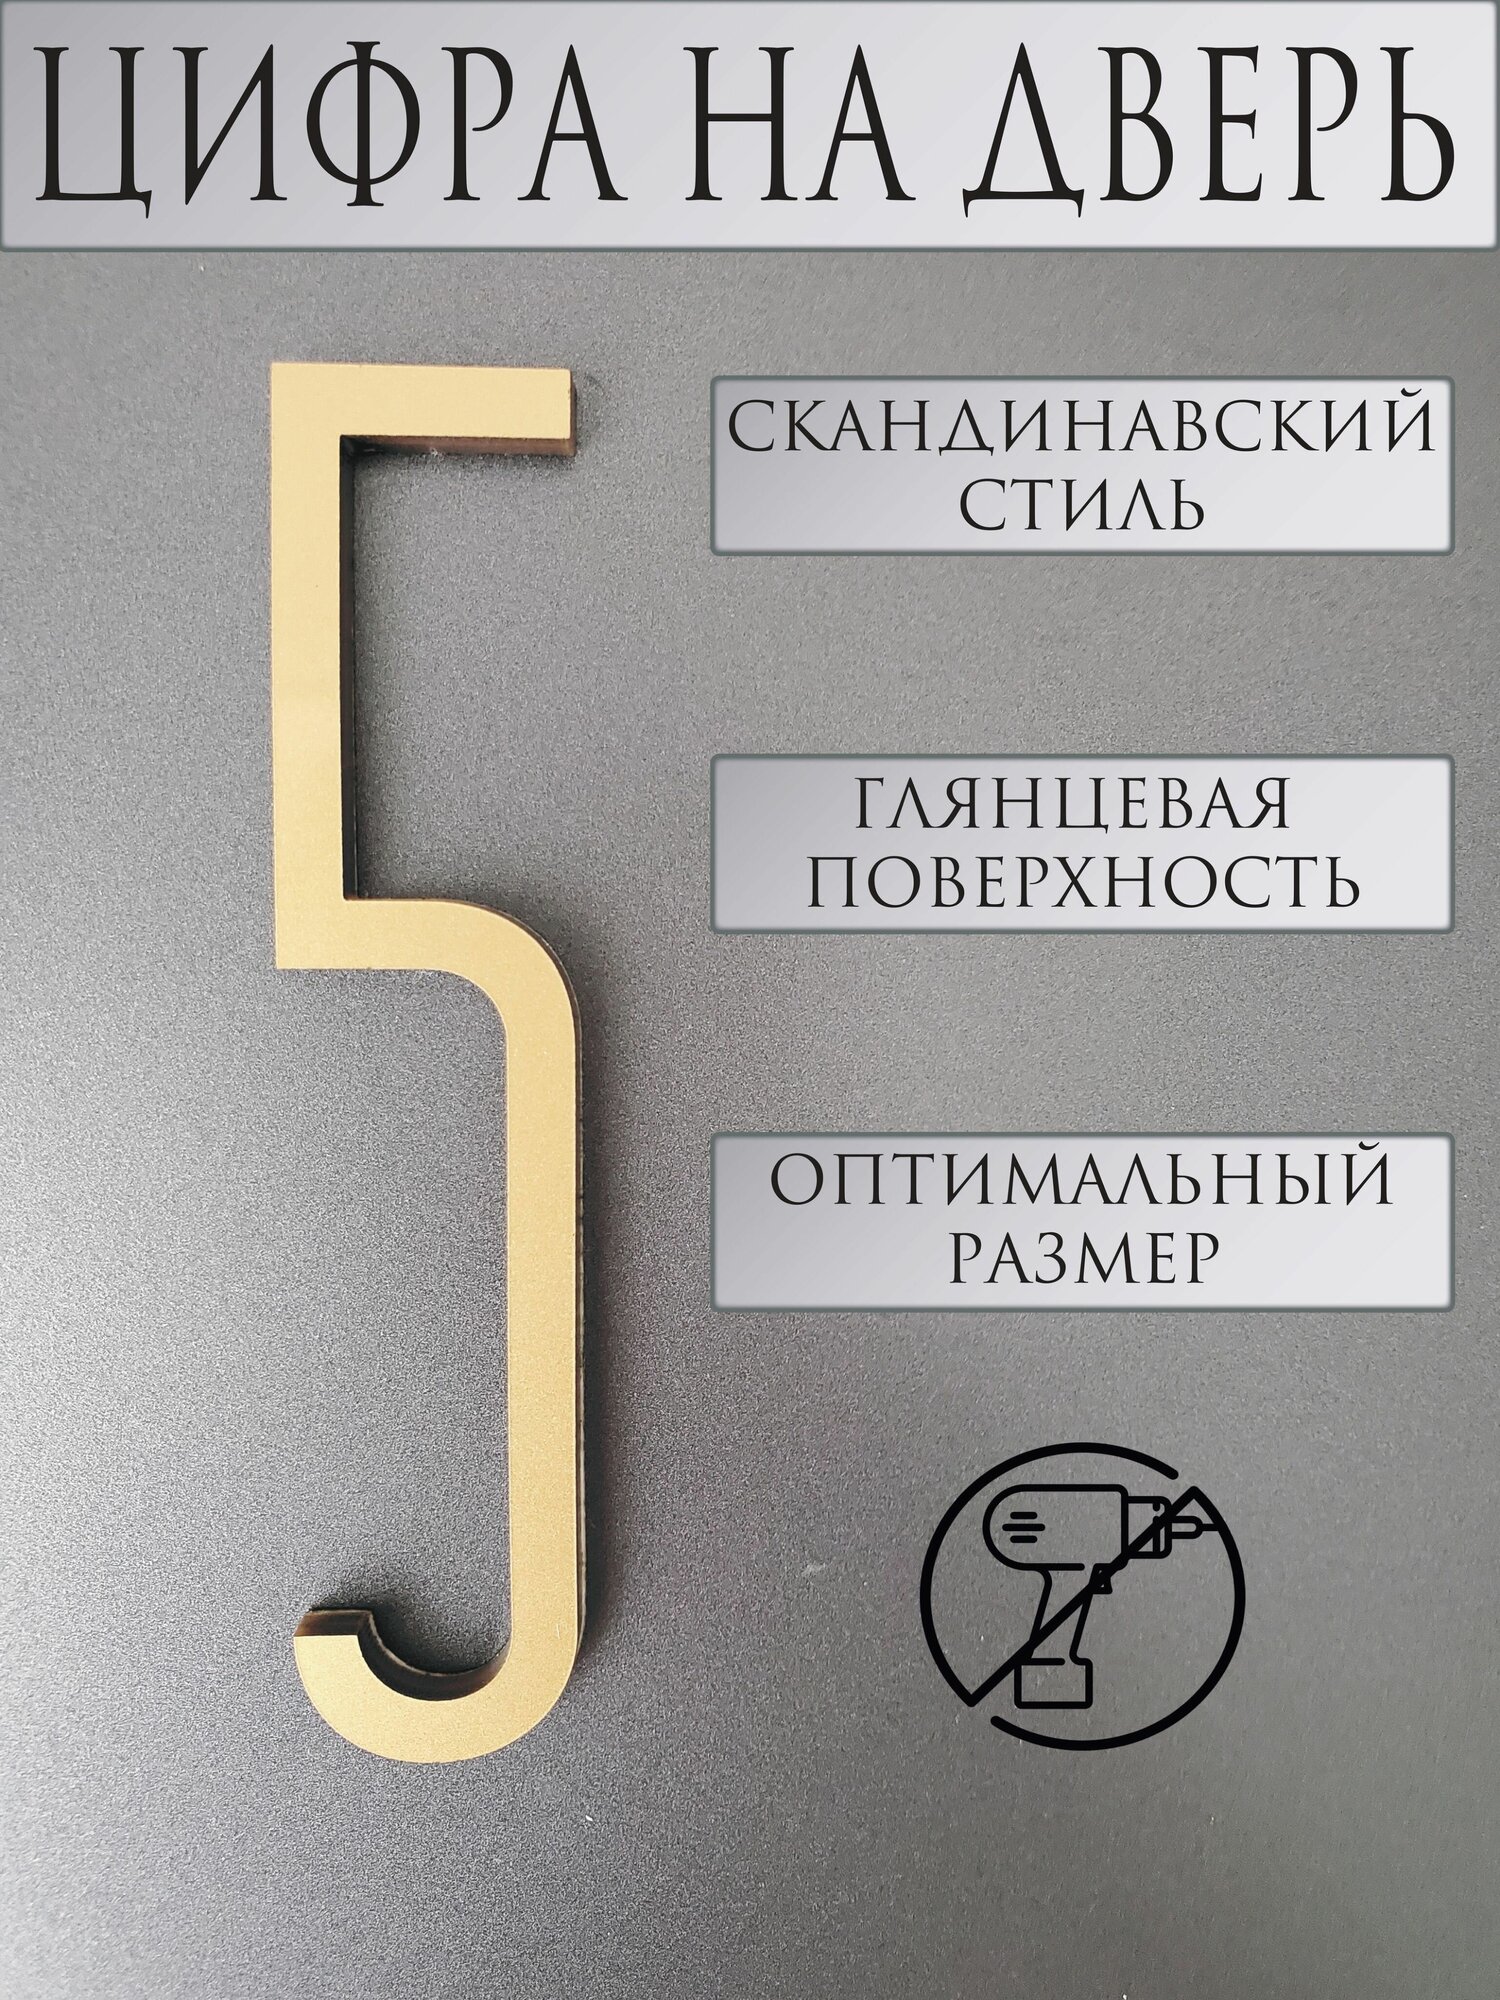 Цифра на дверь "5" в скандинавском стиле, старое золото